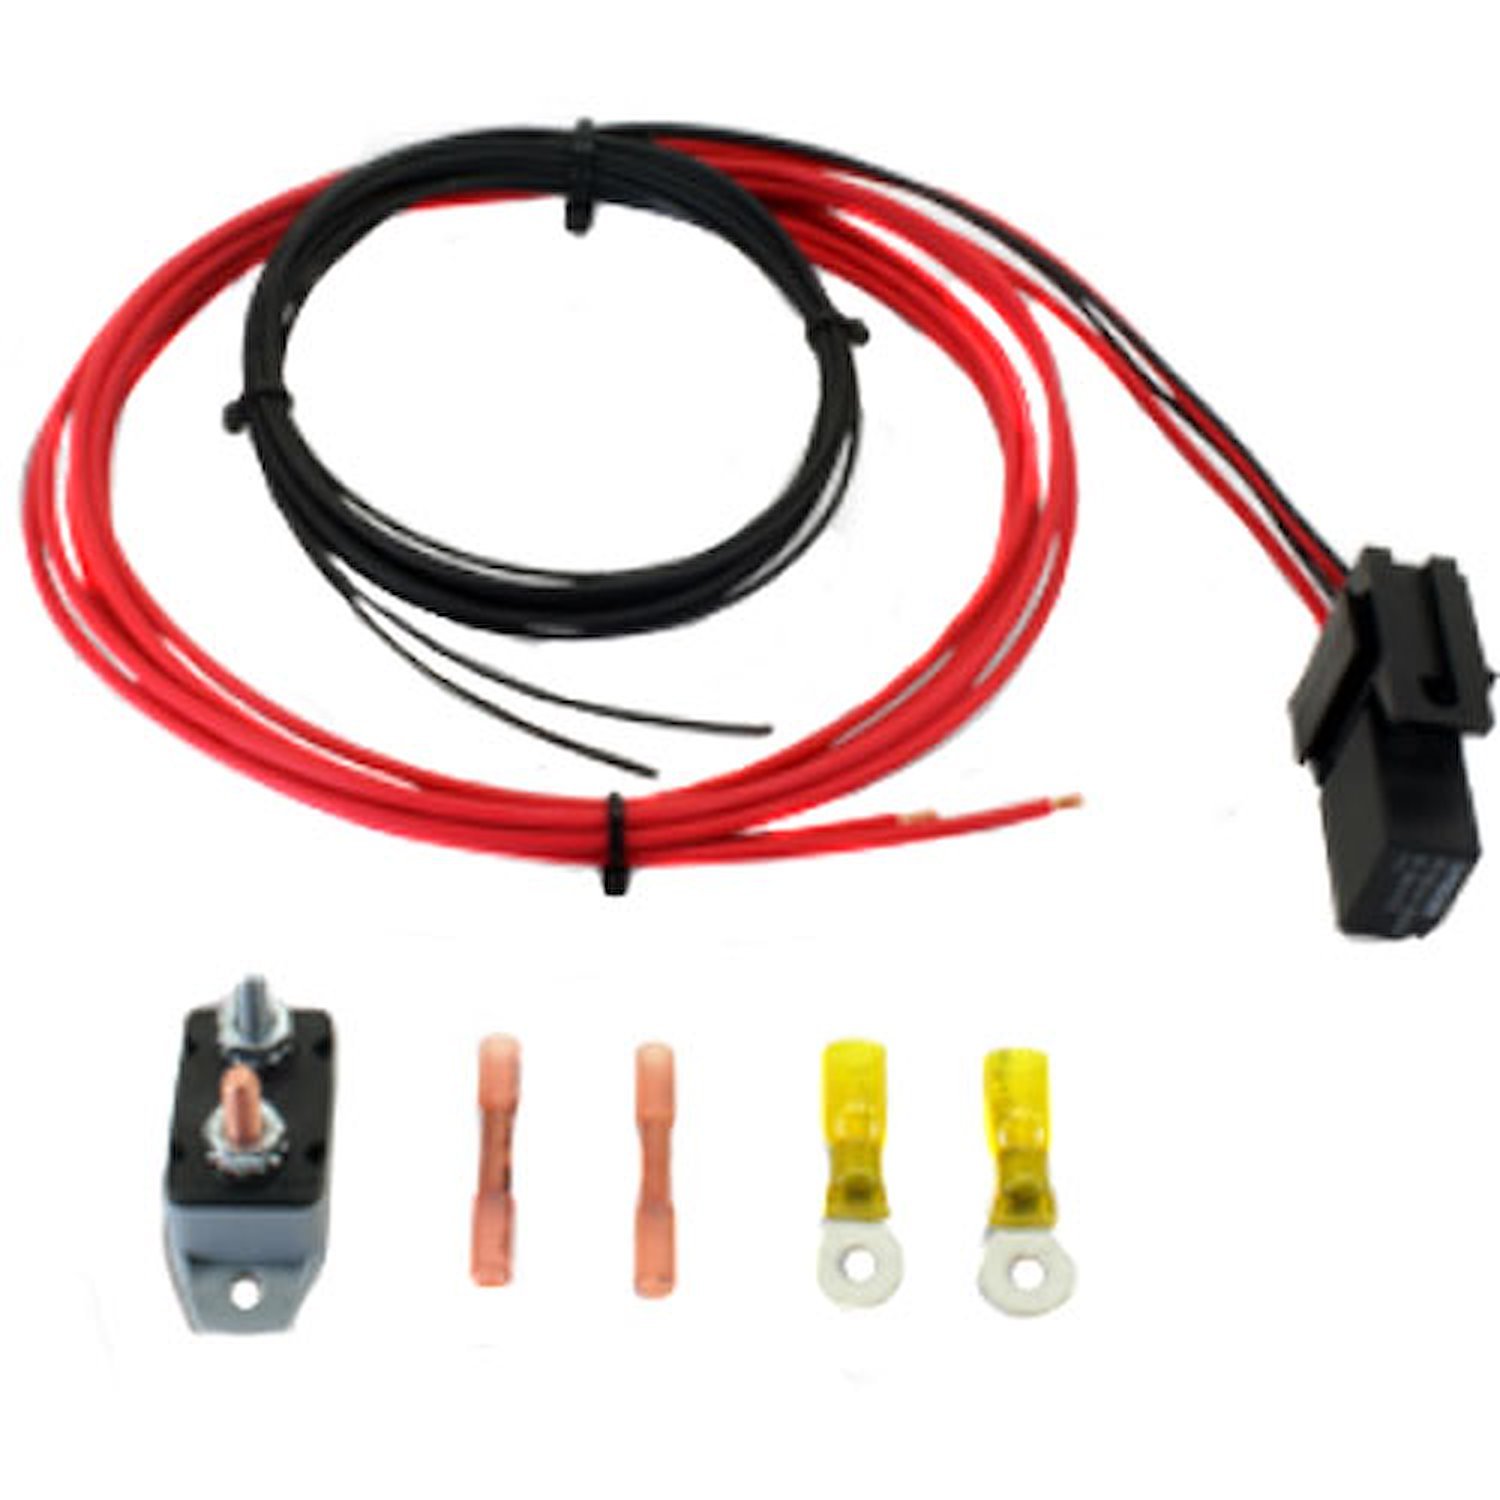 20 Amp Relay Wiring Kit Includes: 20 Amp Circuit Breaker